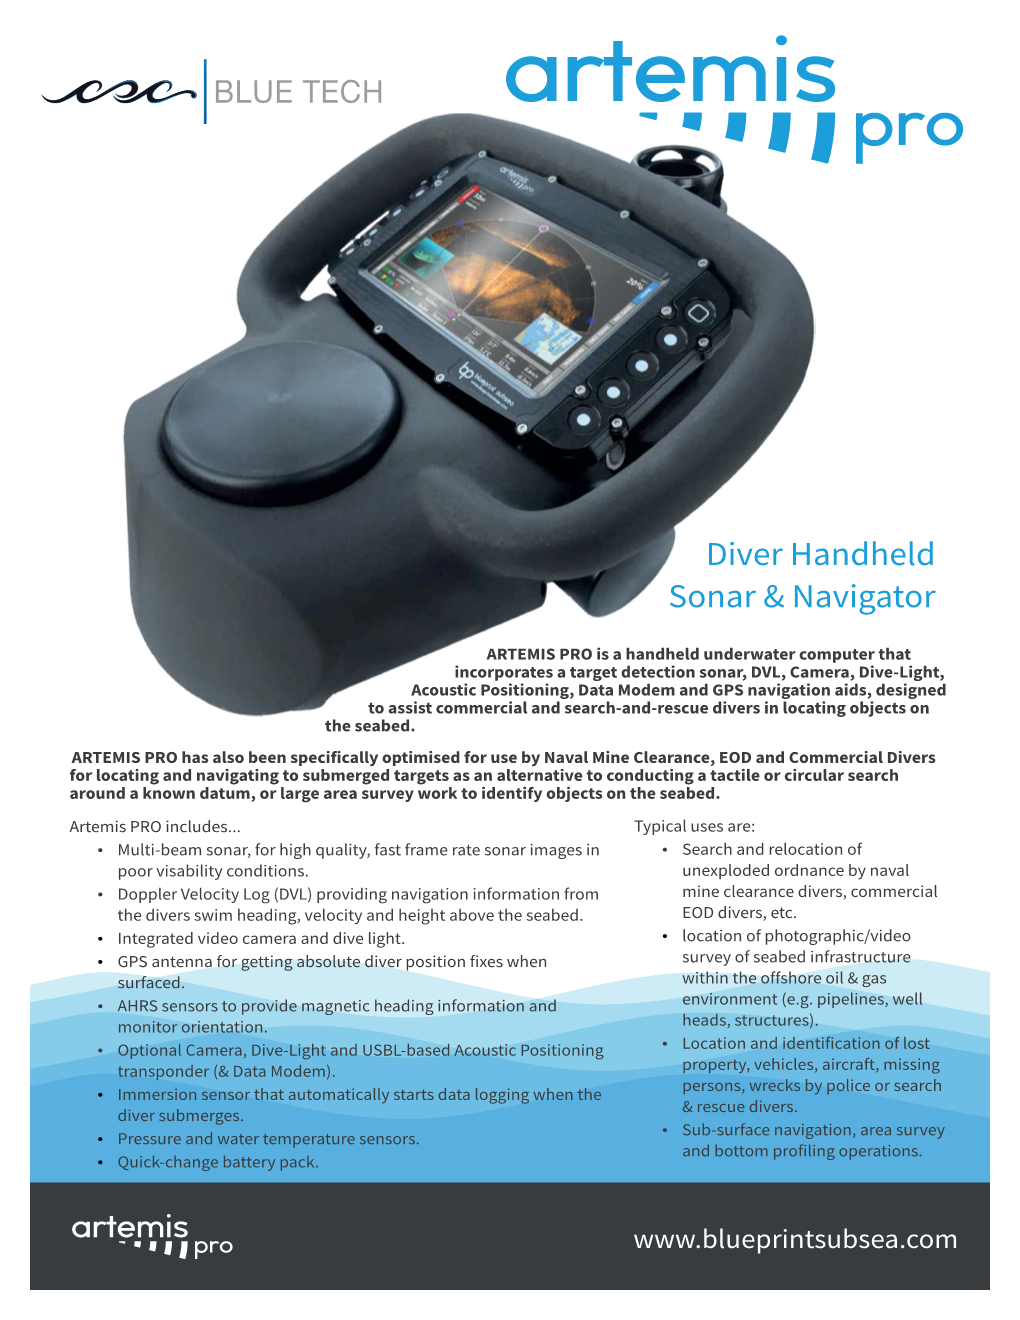 Diver Handheld Sonar & Navigator